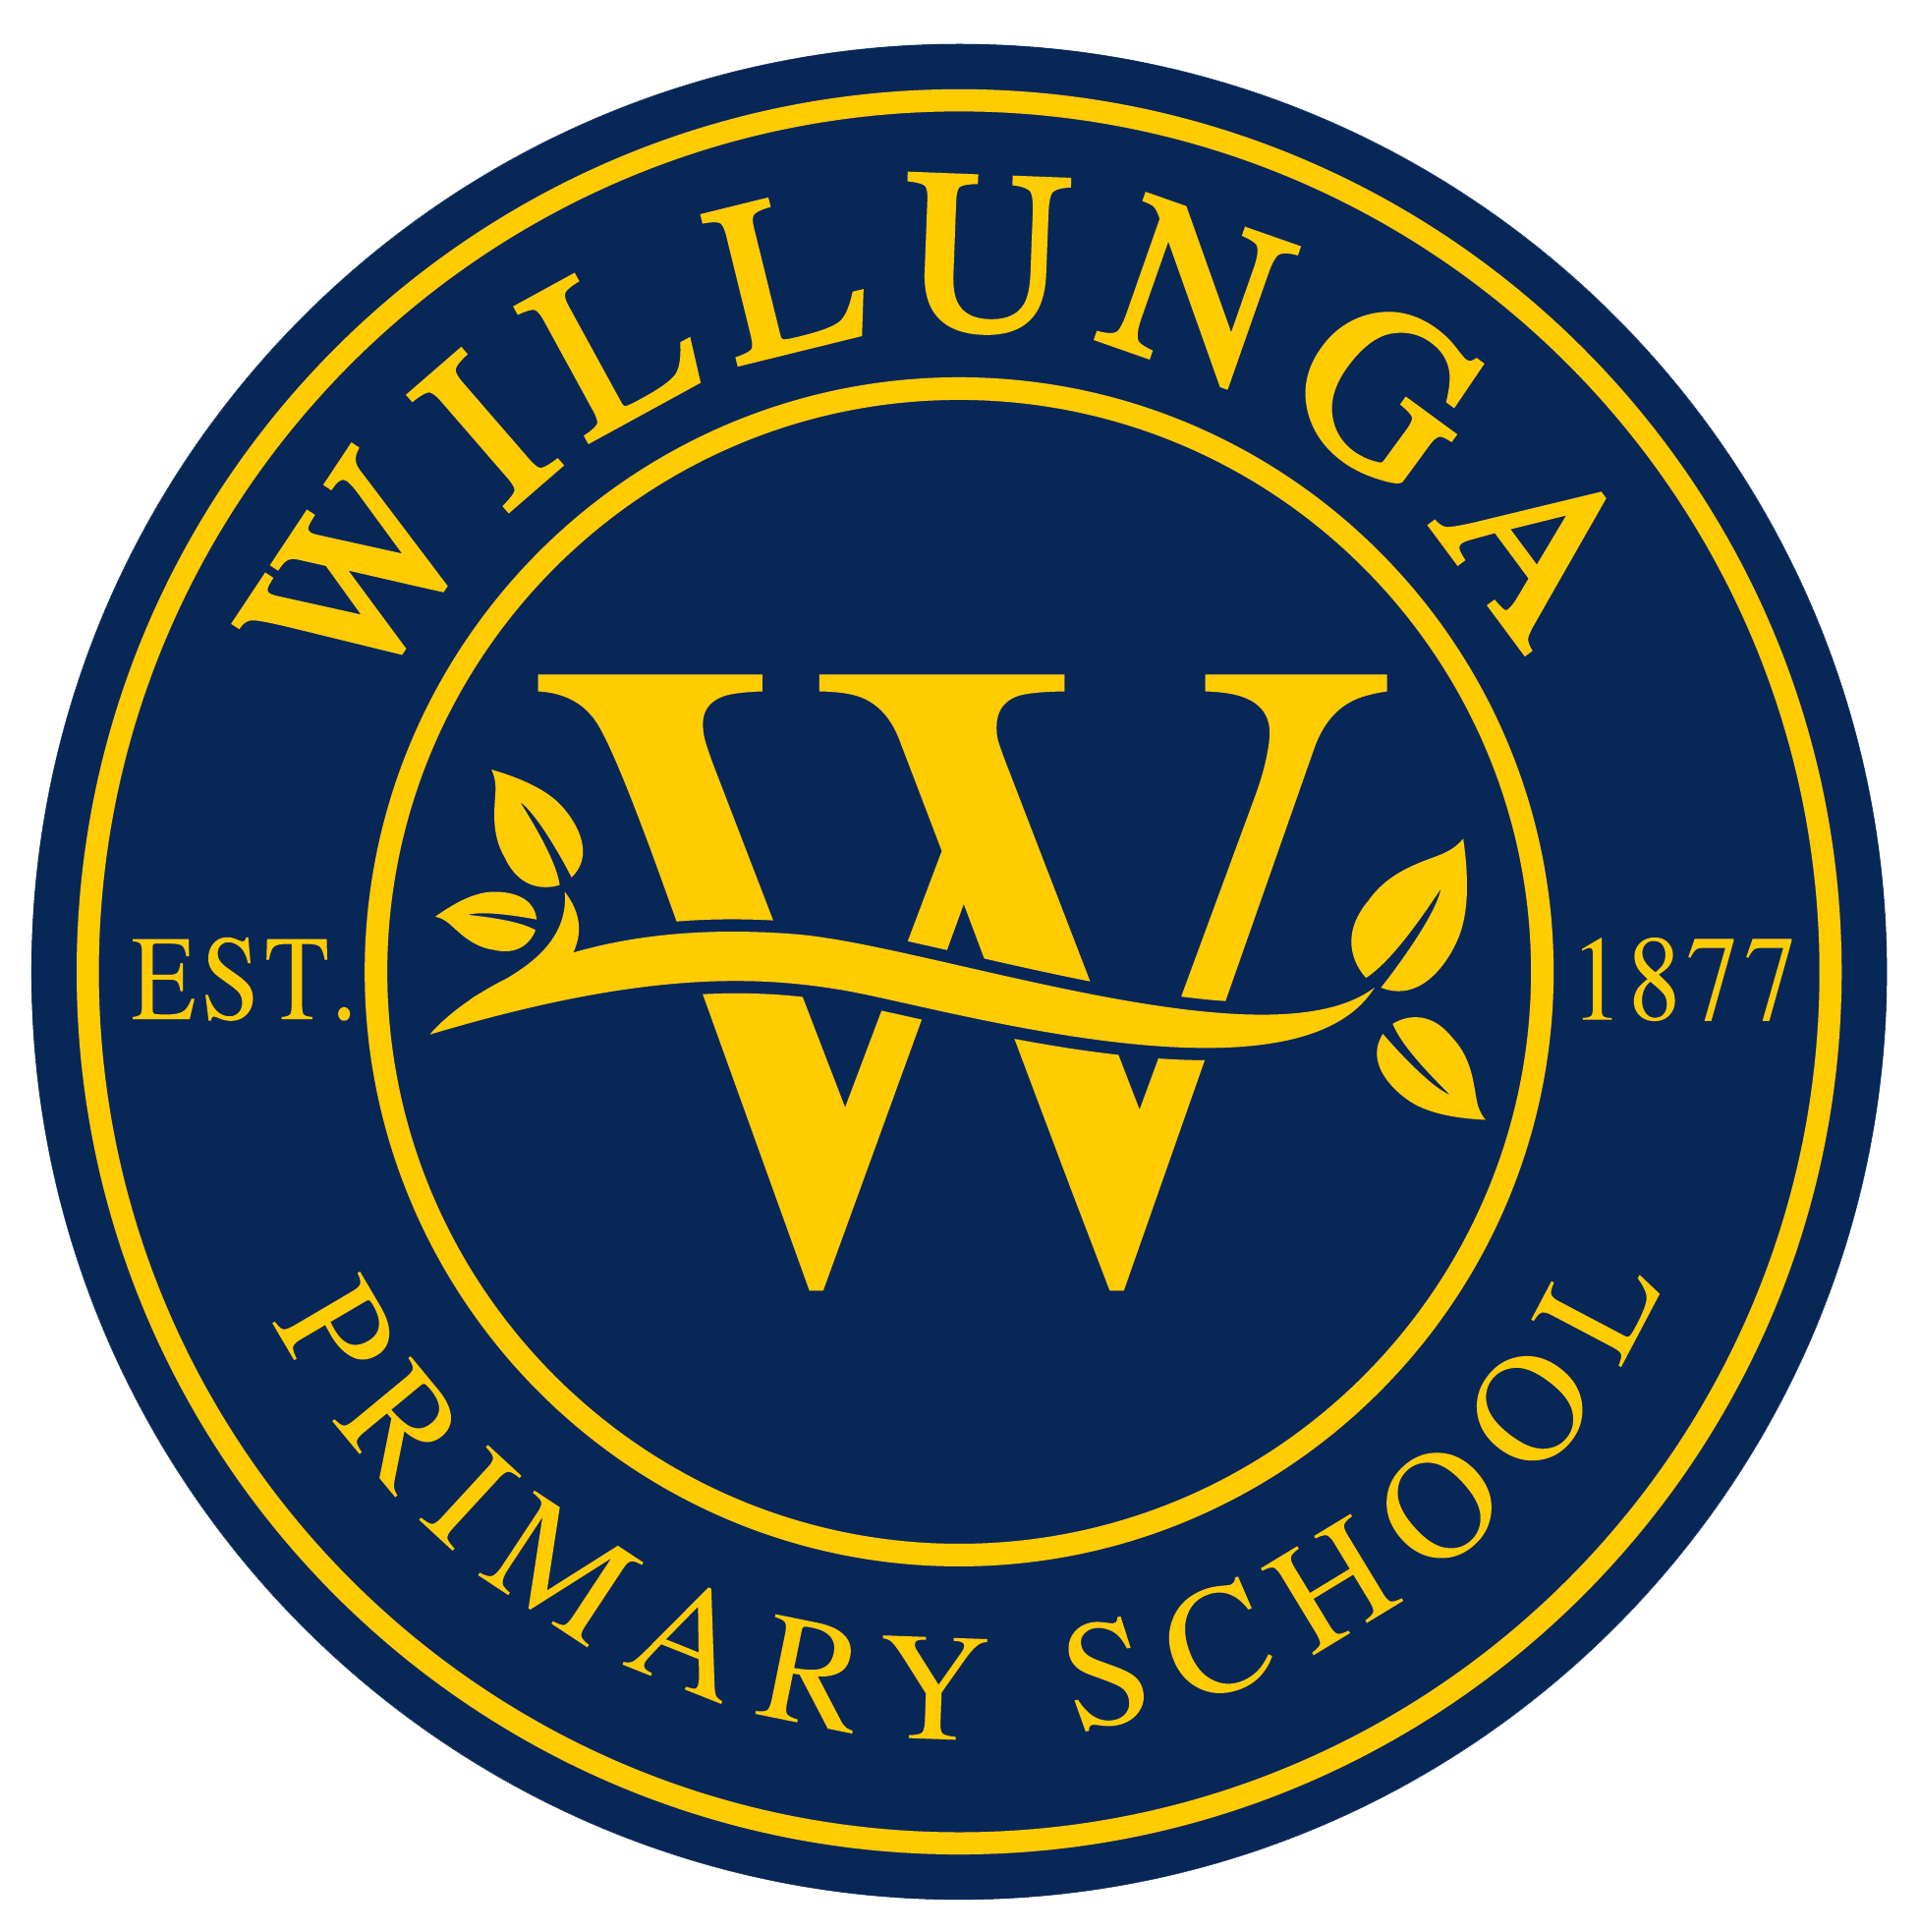 willunga logo blue and yellow